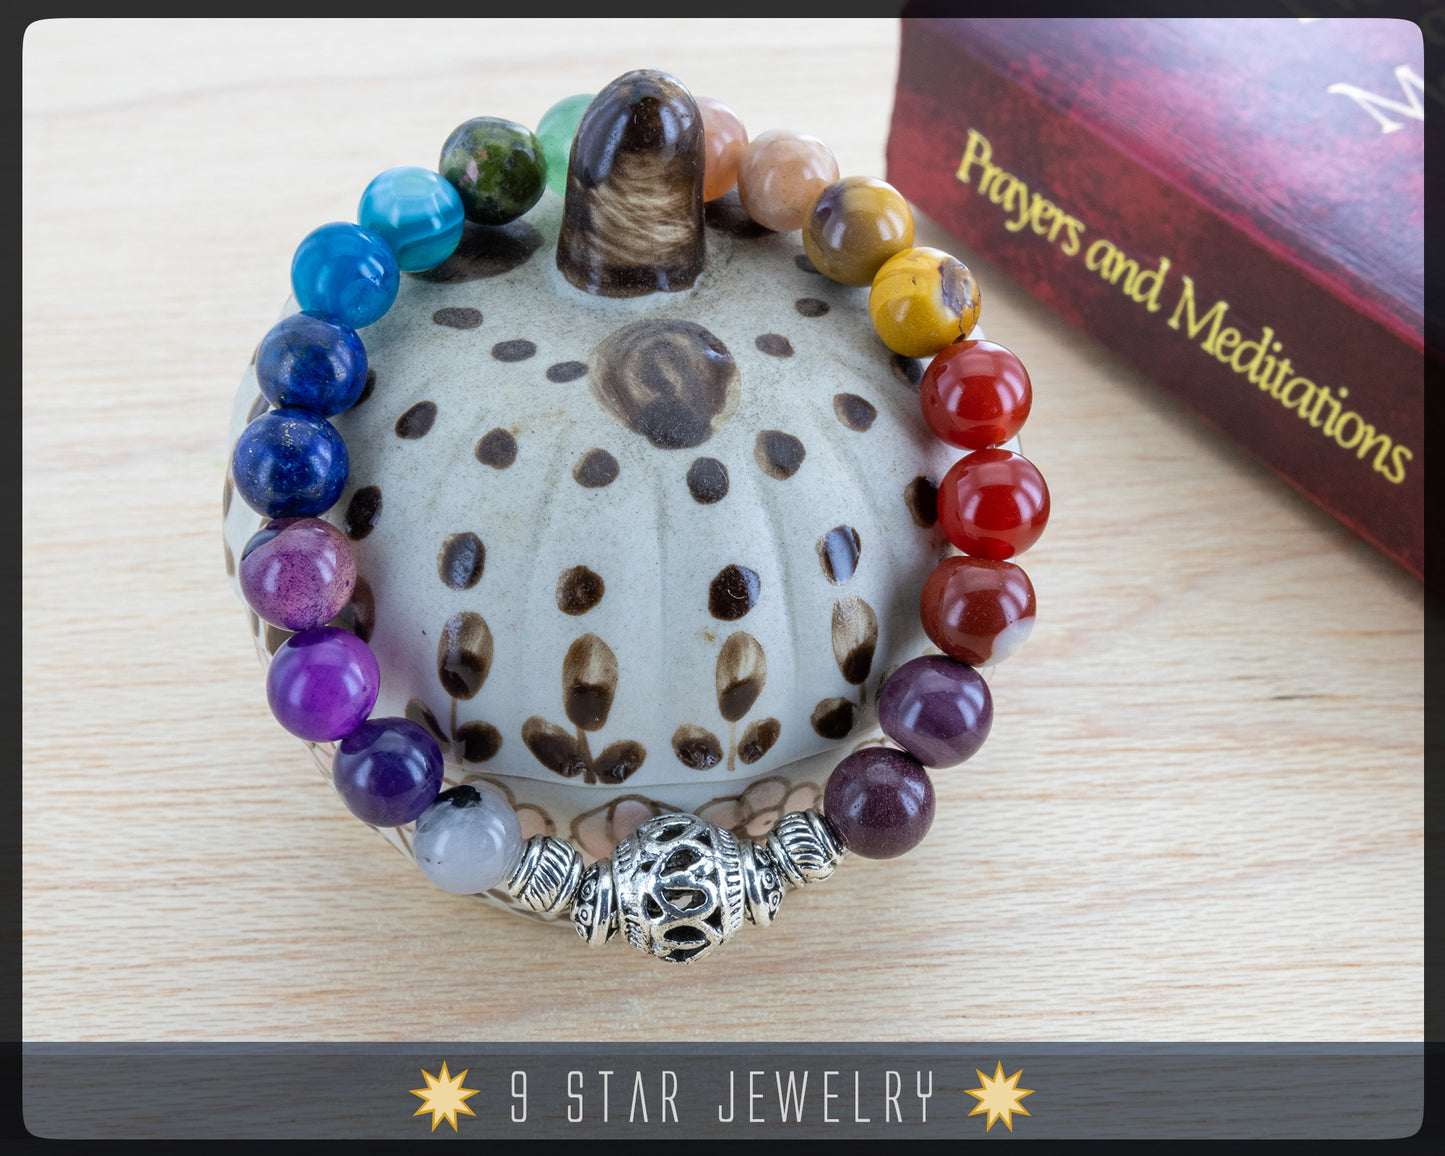 Amethyst, Tourmaline, etc. 19 Unique Gemstones - Baha'i Prayer Beads Bracelet "Unity in Diversity"